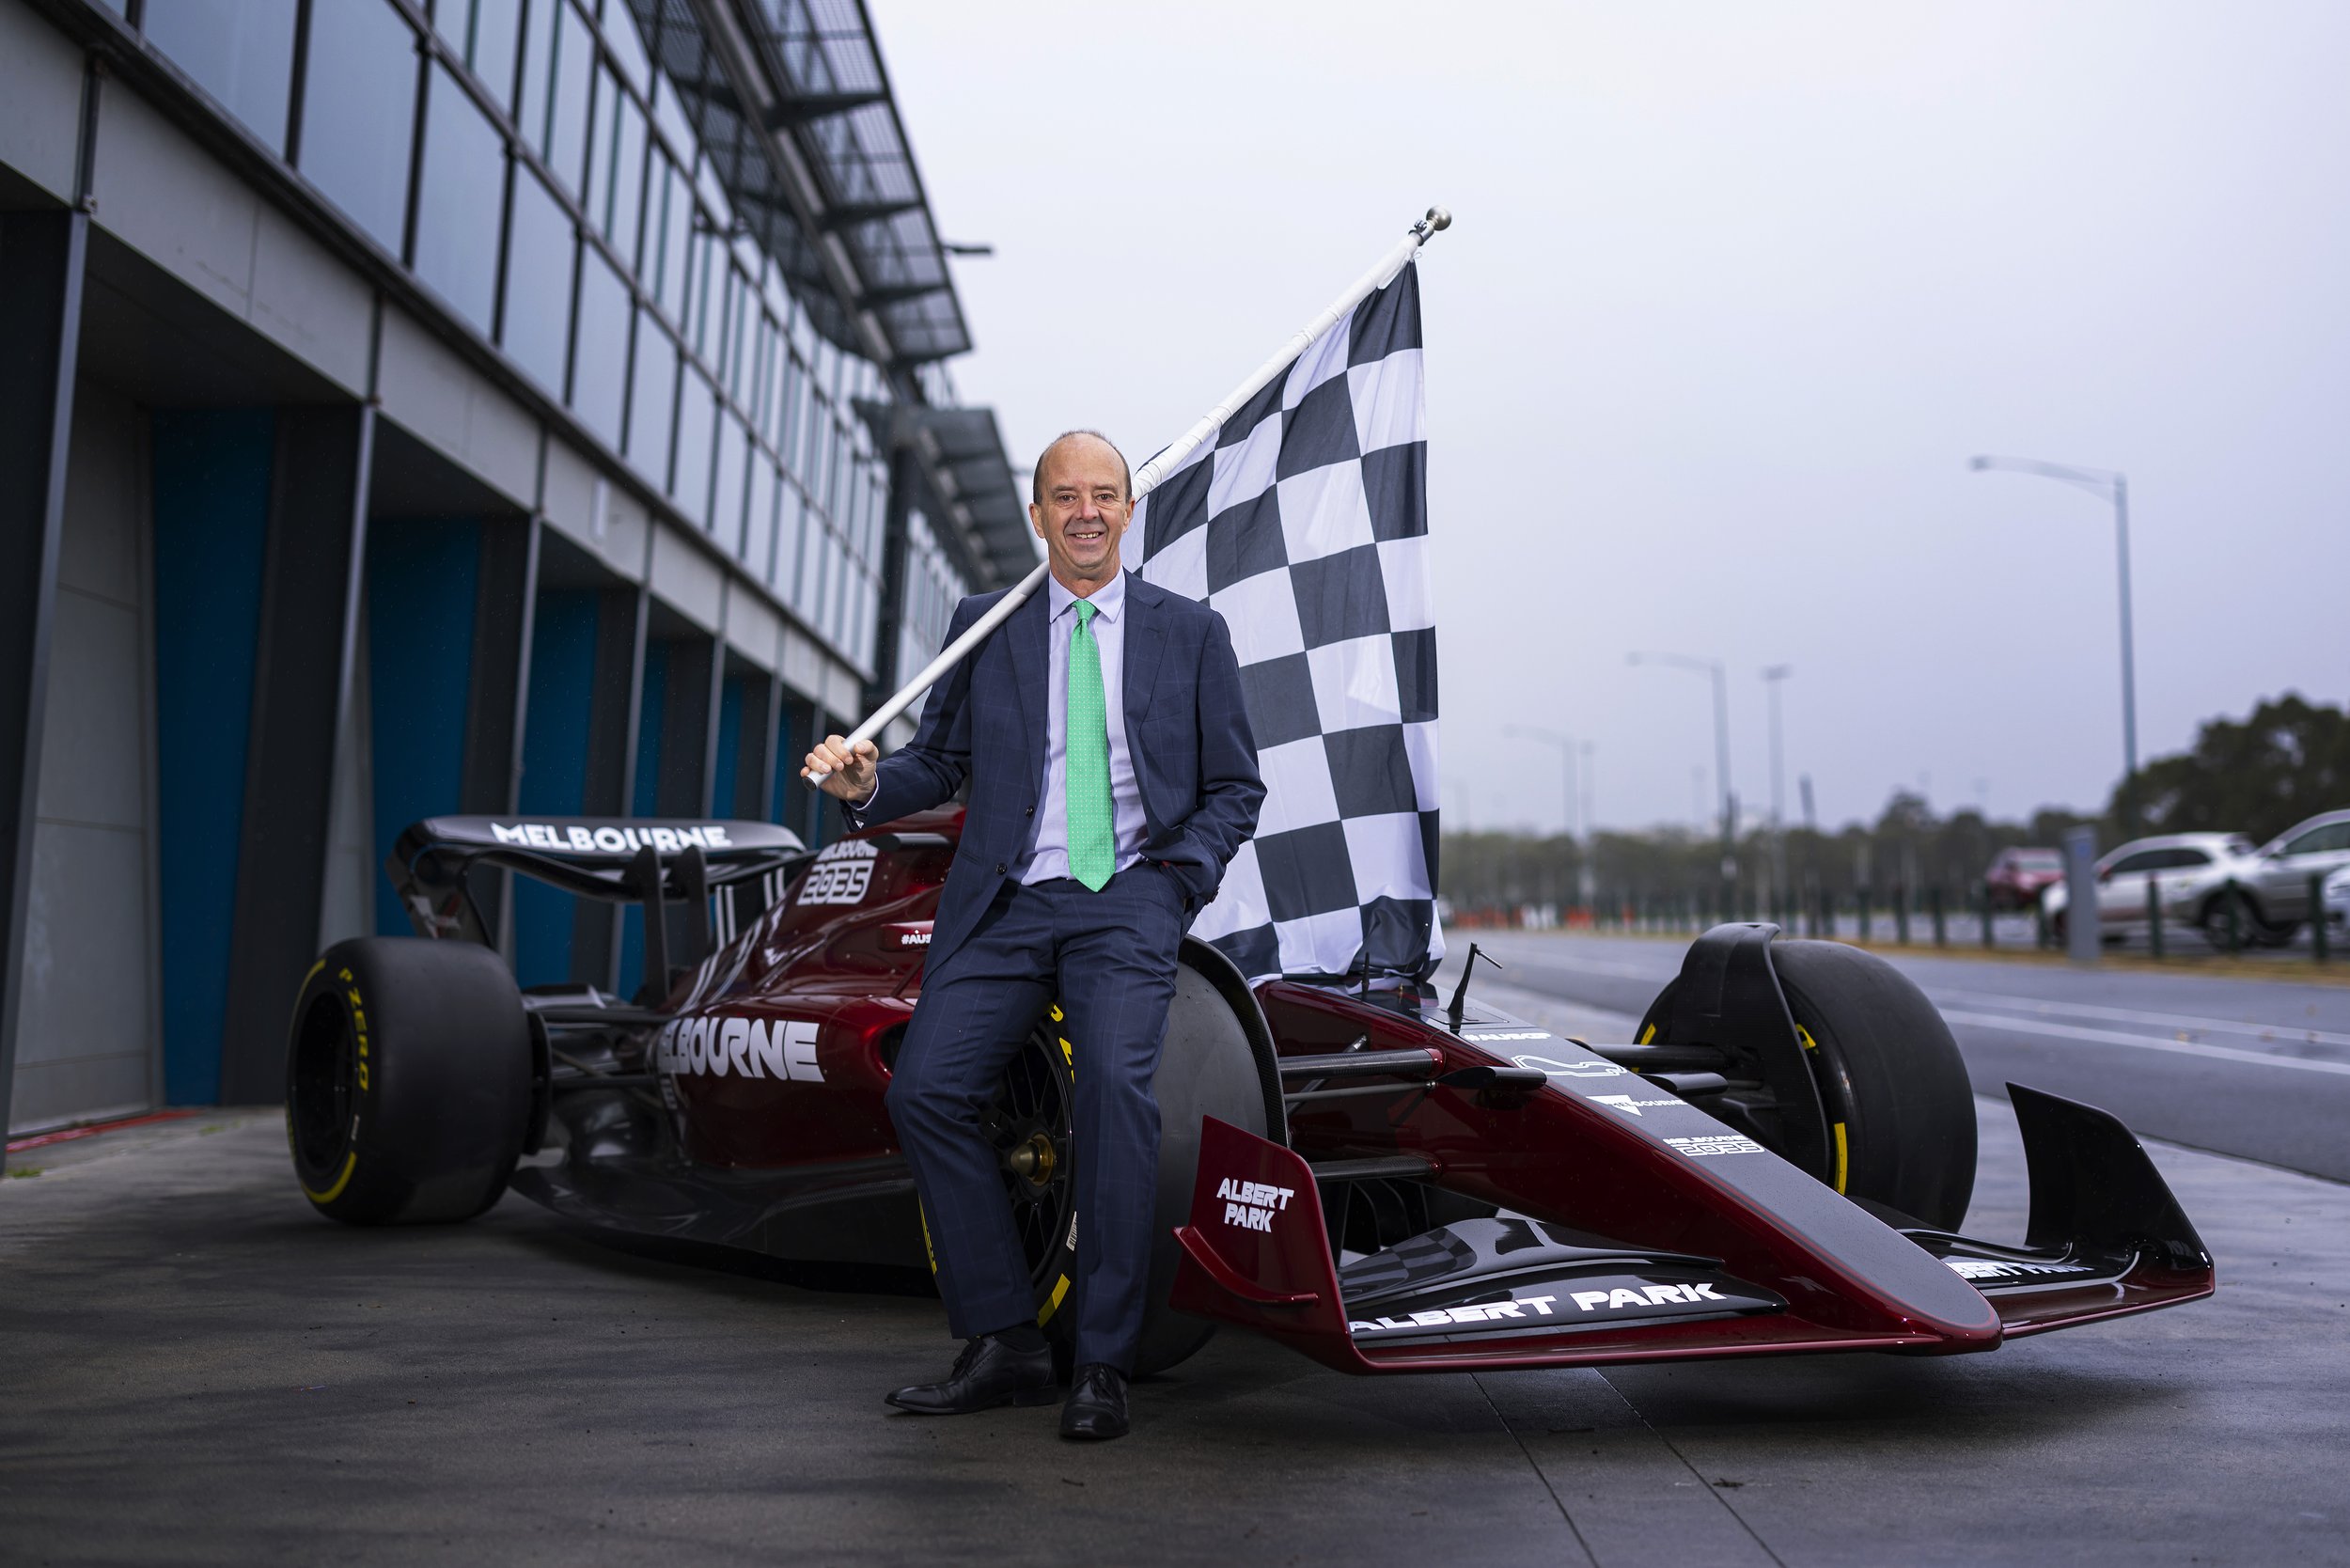 Chequered flag for Australian Grand Prix CEO